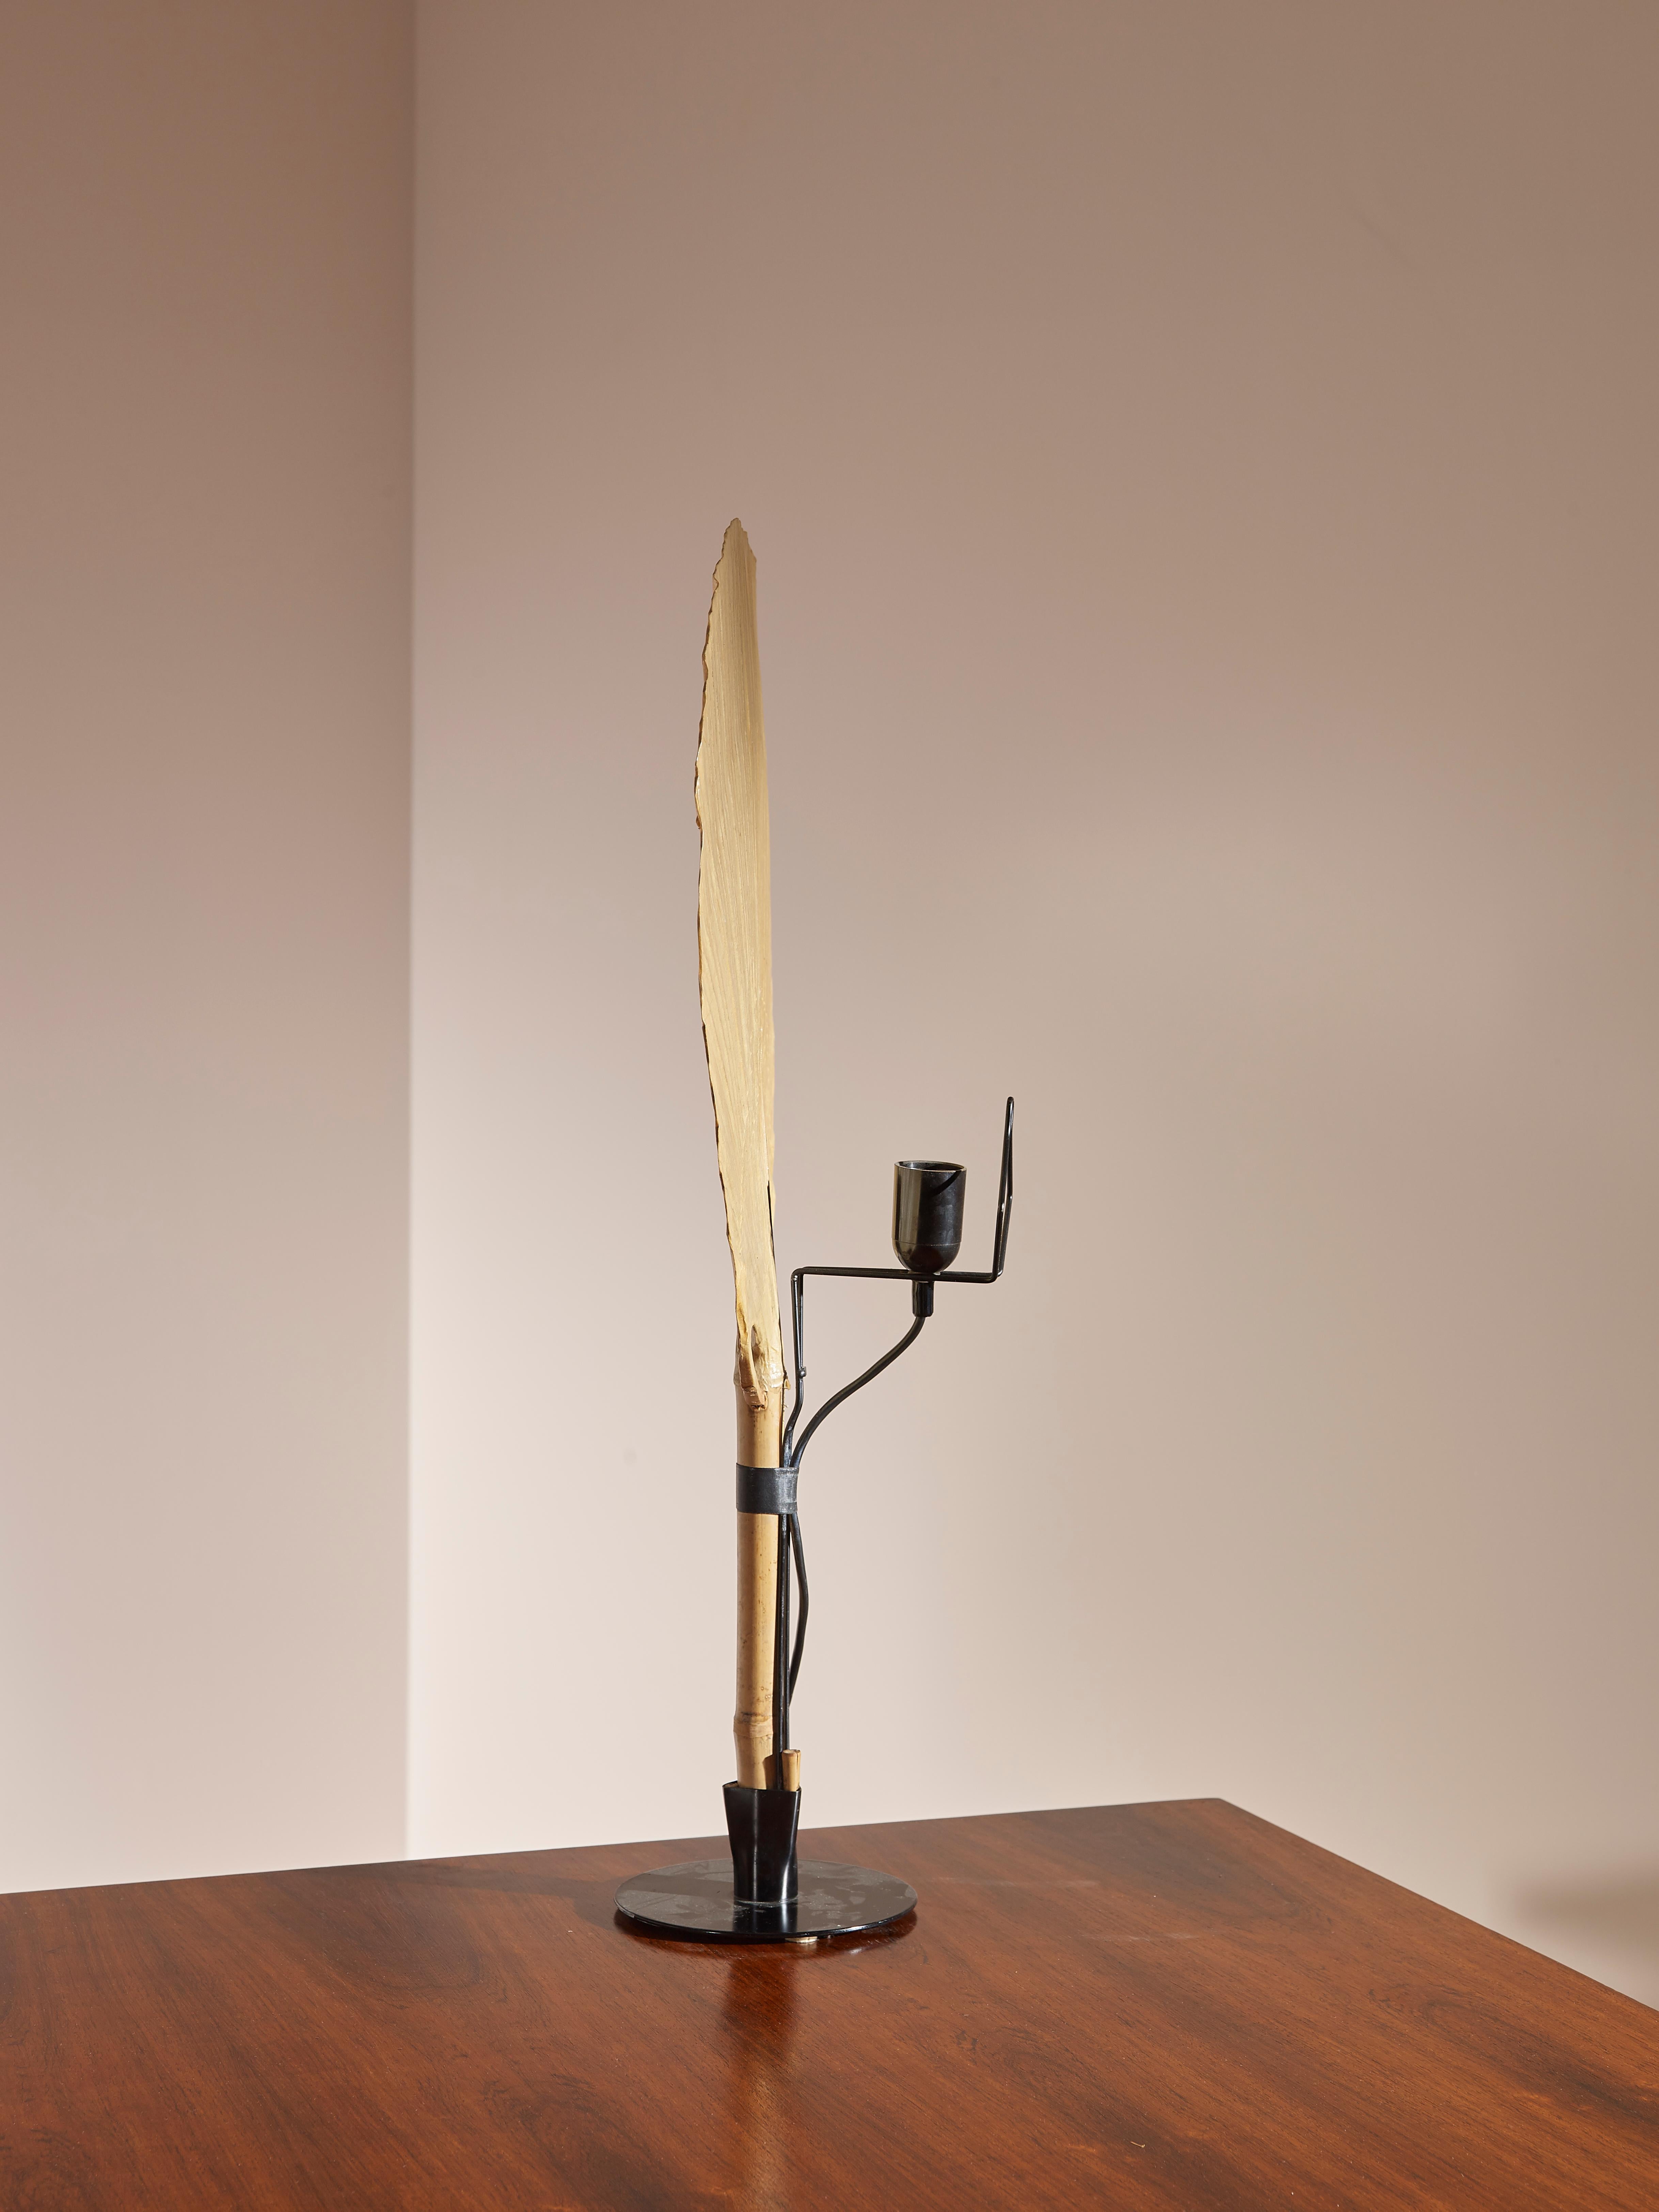 Bamboo ‘Uchiwa’ Table Lamp by Ingo Maurer for M Design, Germany, 1977